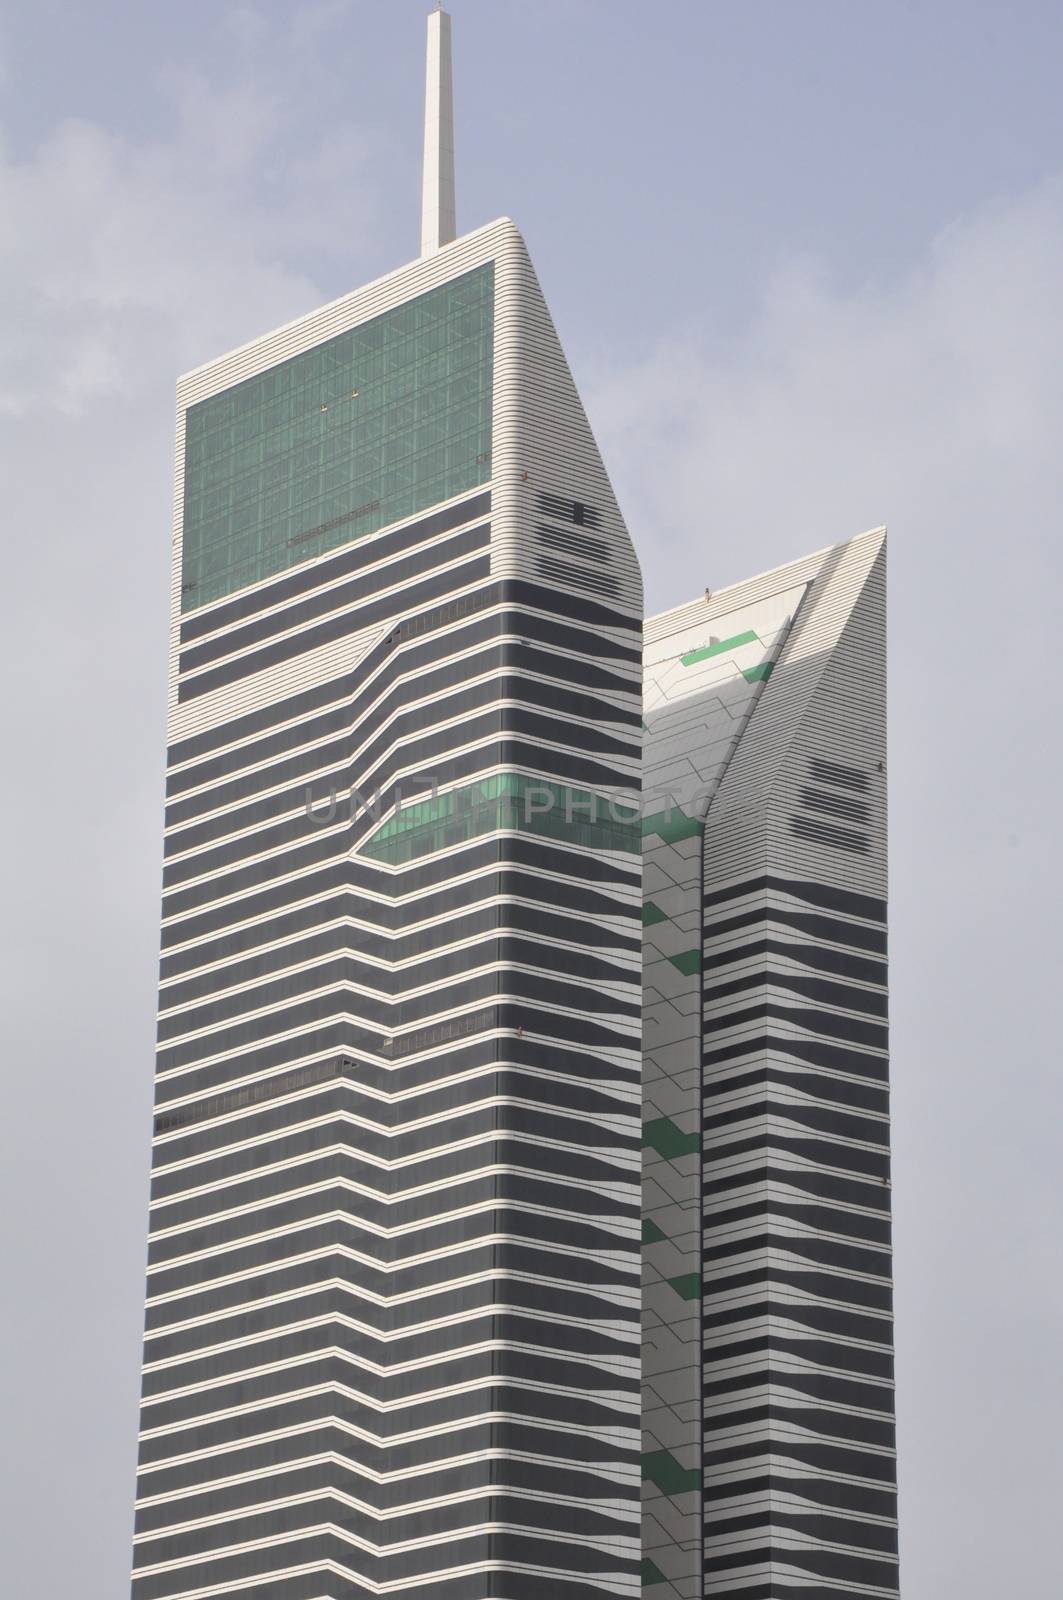 Acico Twin Towers along Sheikh Zayed Road in Dubai, UAE by sainaniritu